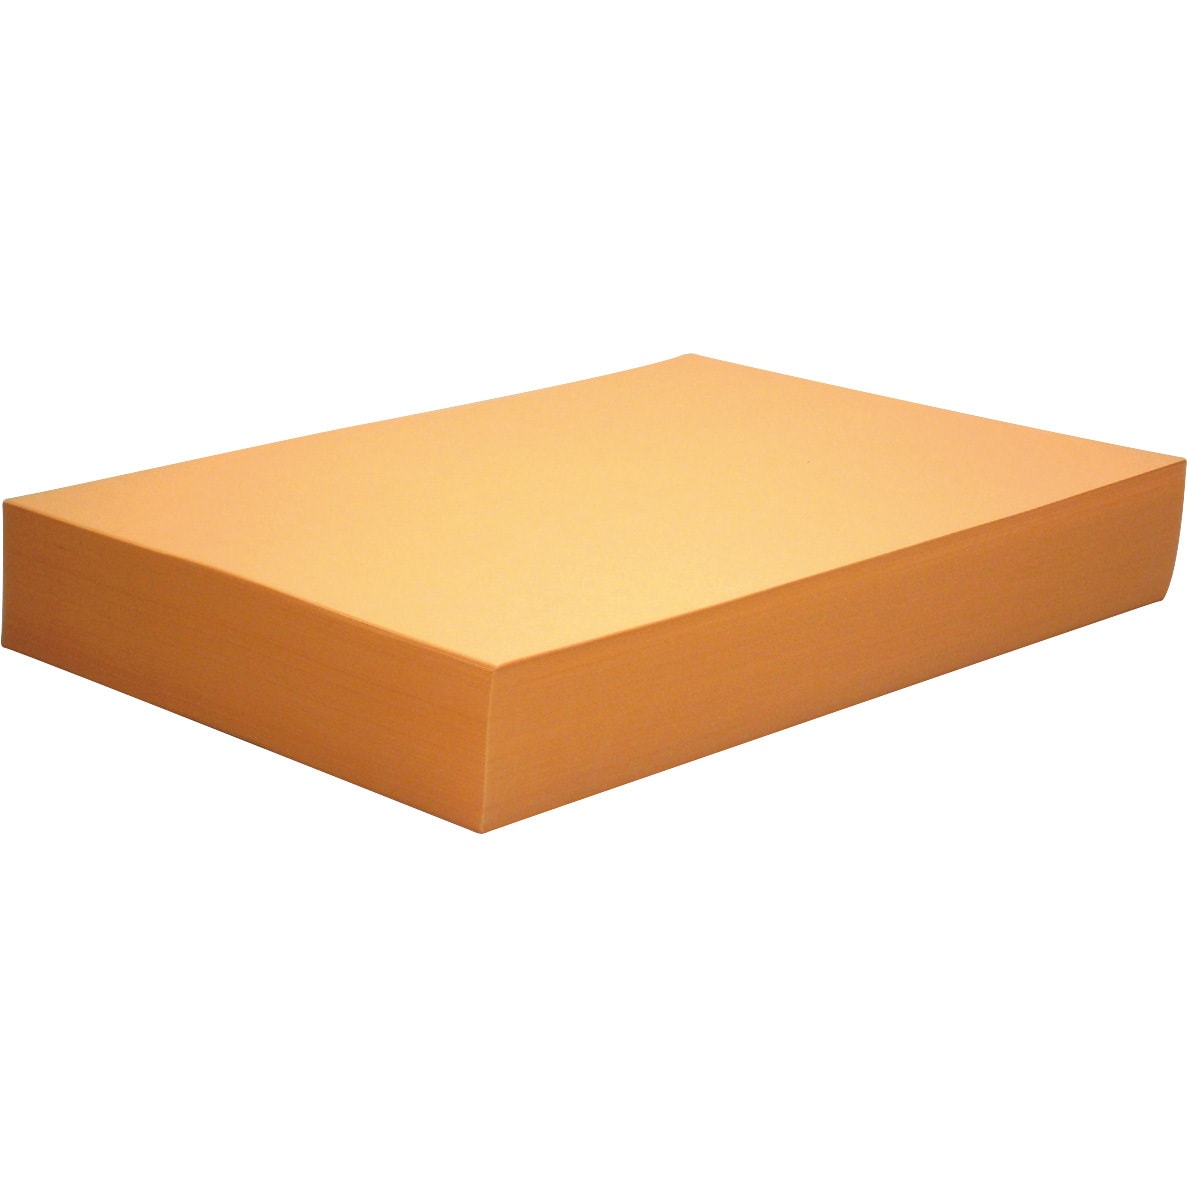 A4 オレンジ カラーコピー用紙 1冊(500枚) 北越製紙 【通販サイト